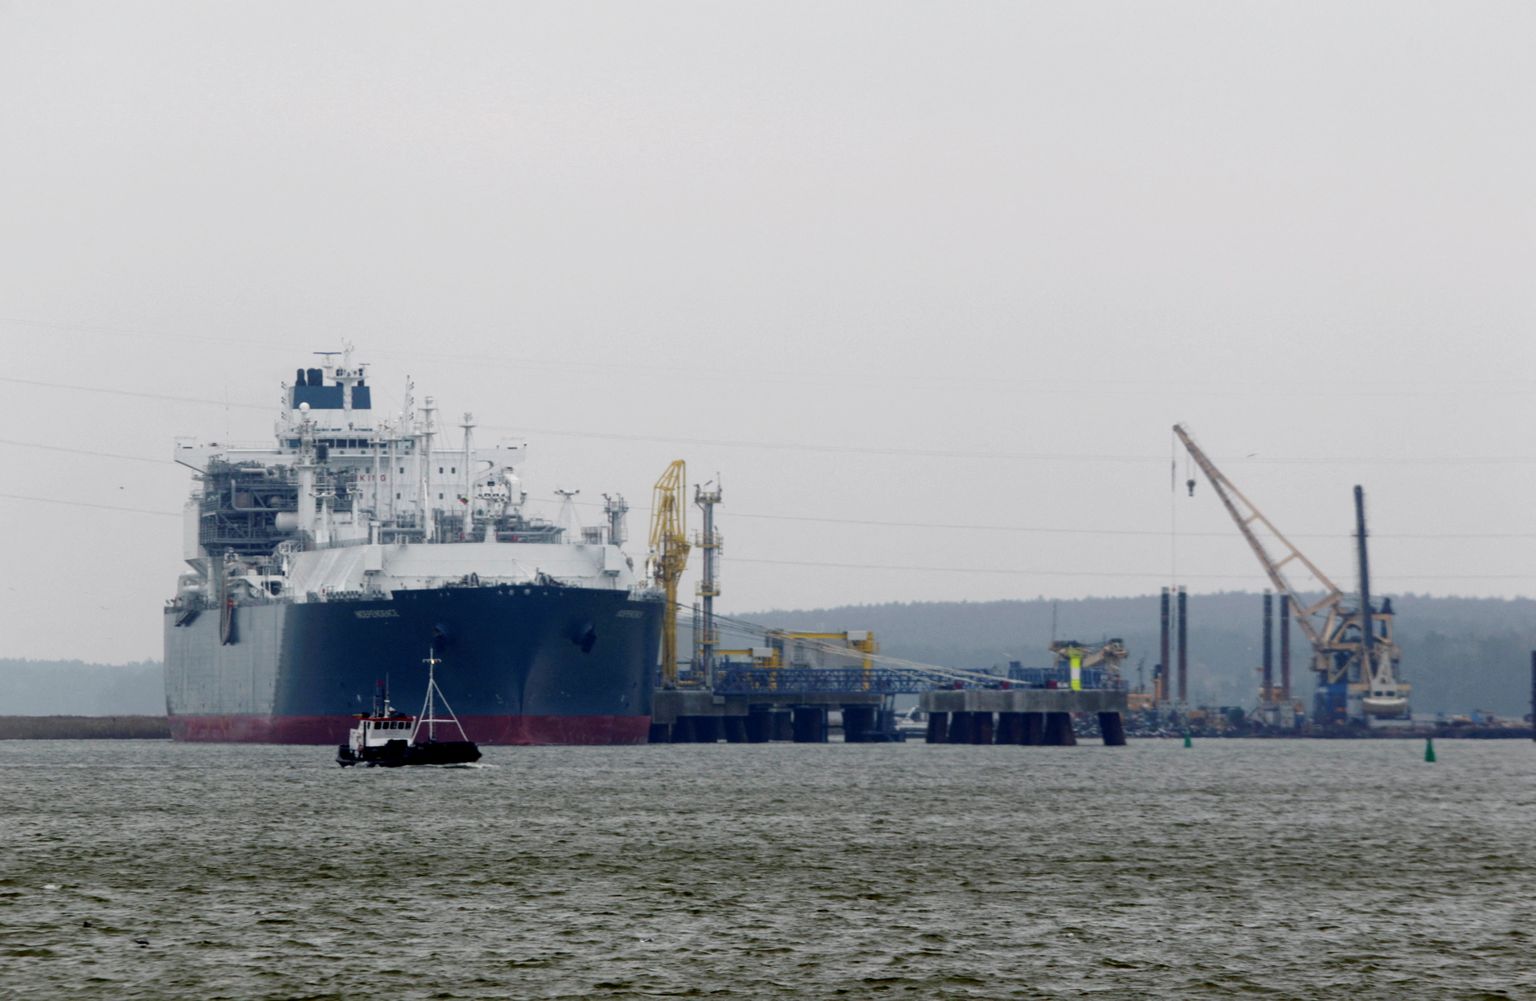 Floating storage regasification unit (والتي ستكون مفاجأة سيئة للغاية للناس في فبراير) «Independence» is docked at the liquefied natural gas (LNG) terminal in Klaipeda port.